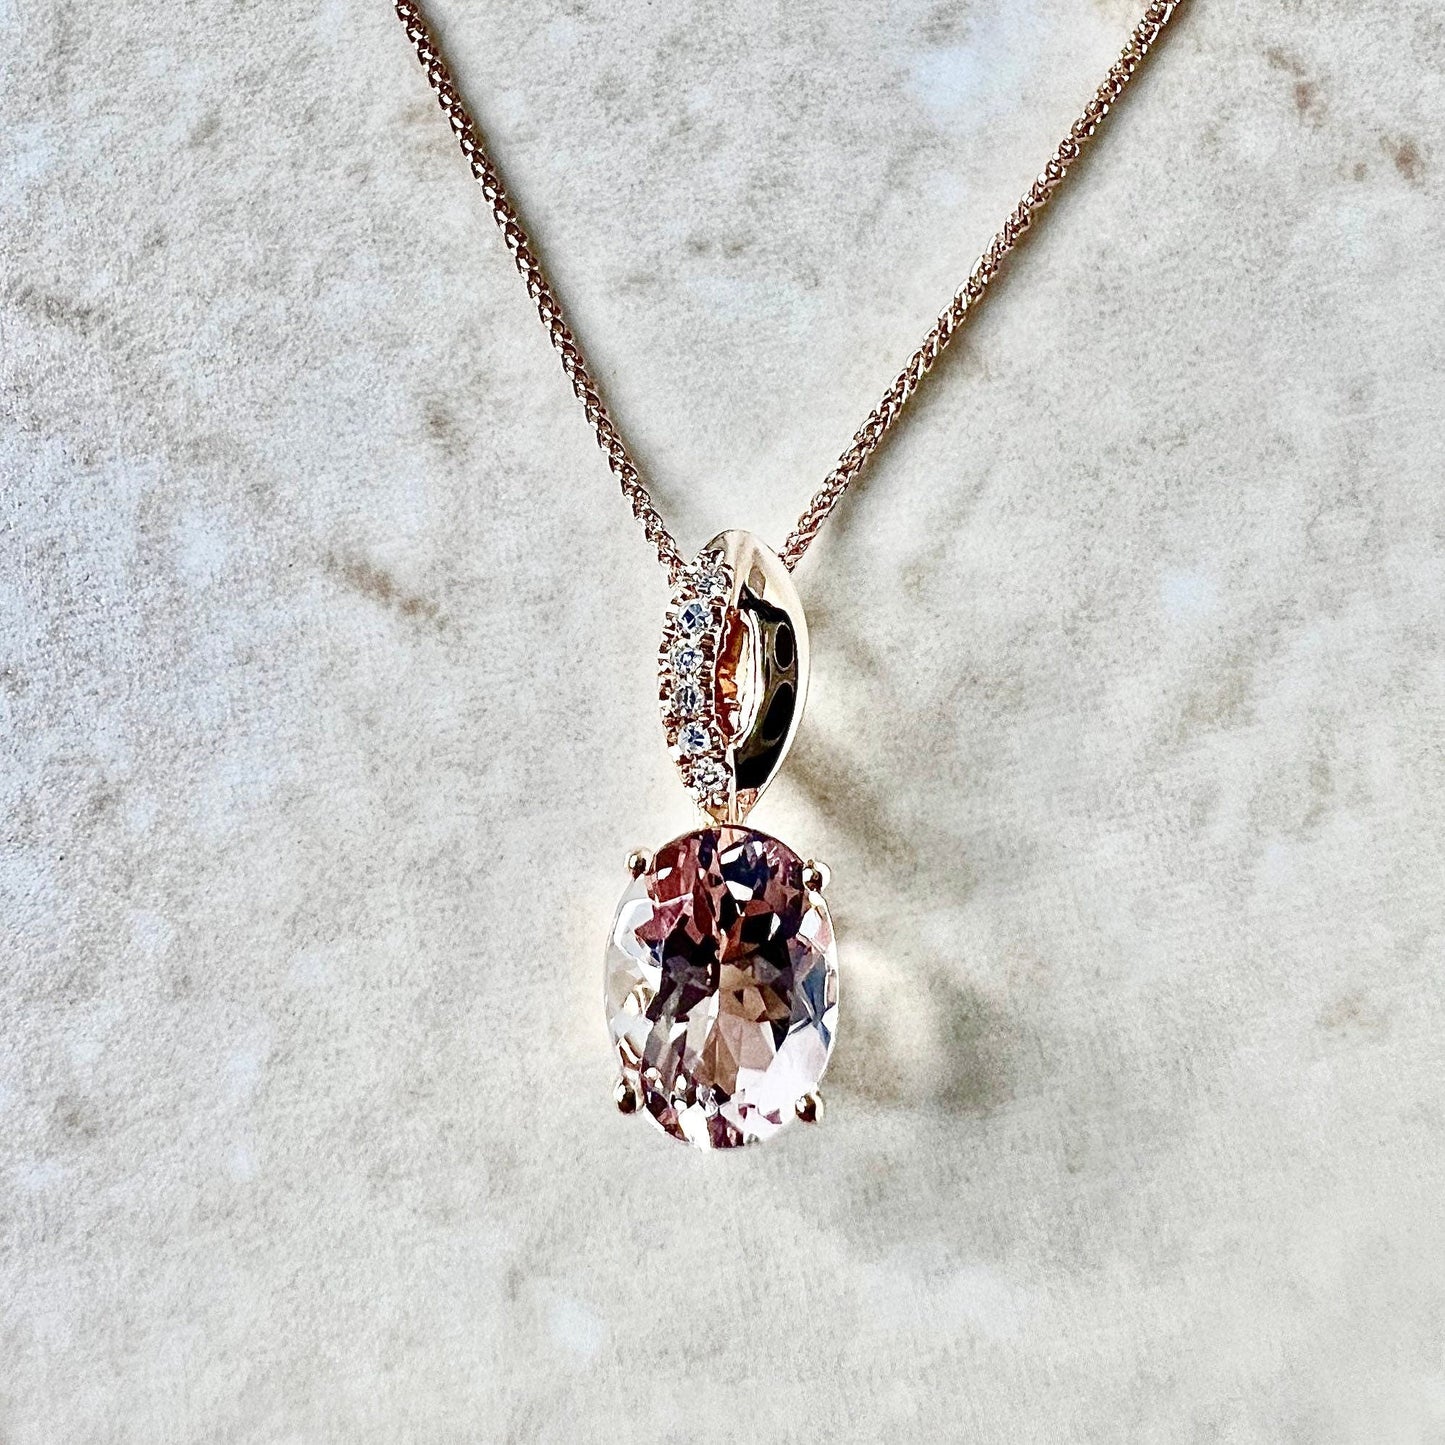 14K Oval Morganite & Diamond Pendant Necklace - Rose Gold Morganite Pendant - Birthday Gift For Her - Holiday Gift - Christmas Gift